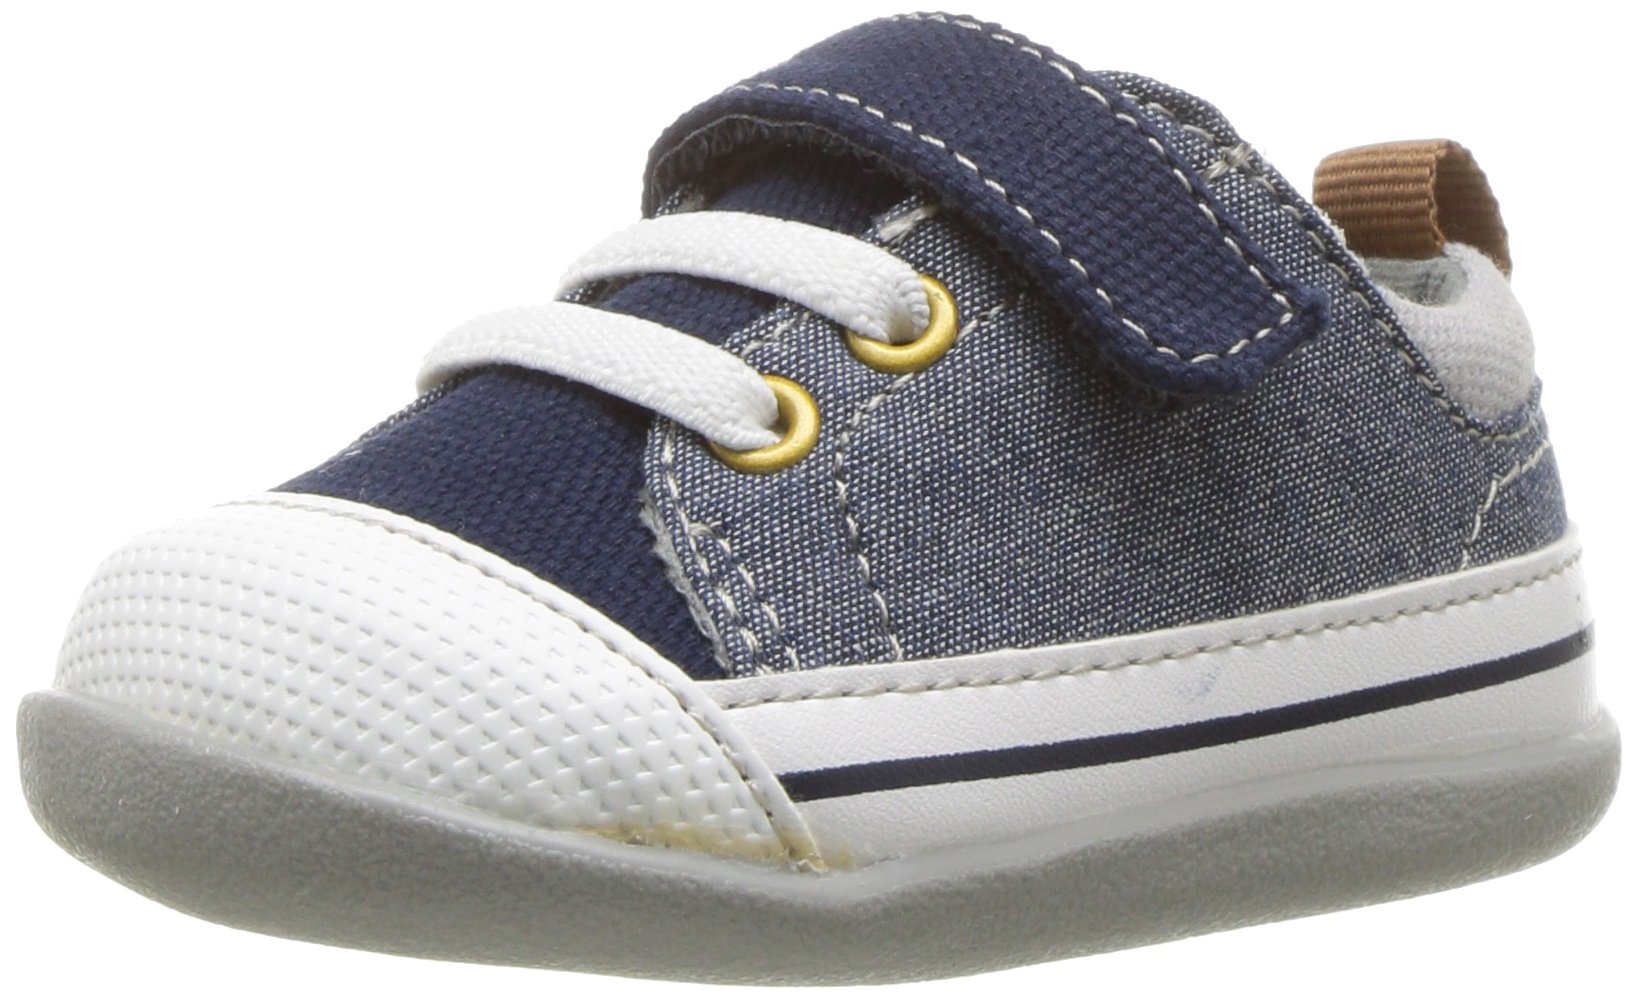 See Kai Run, Stevie II First Walker Sneakers for Infants